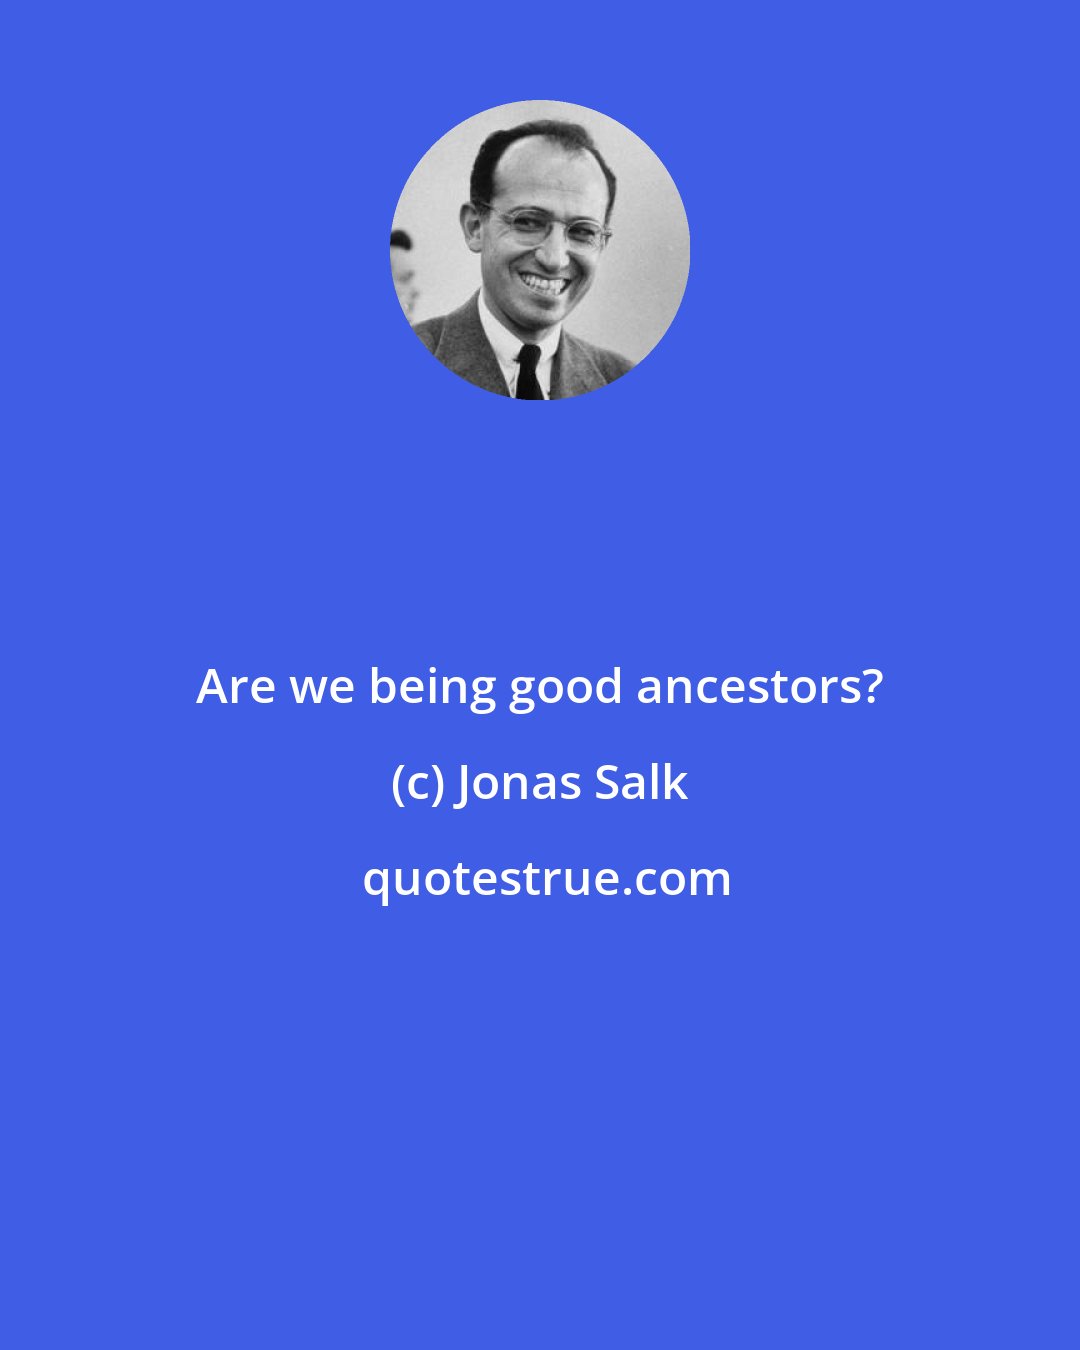 Jonas Salk: Are we being good ancestors?